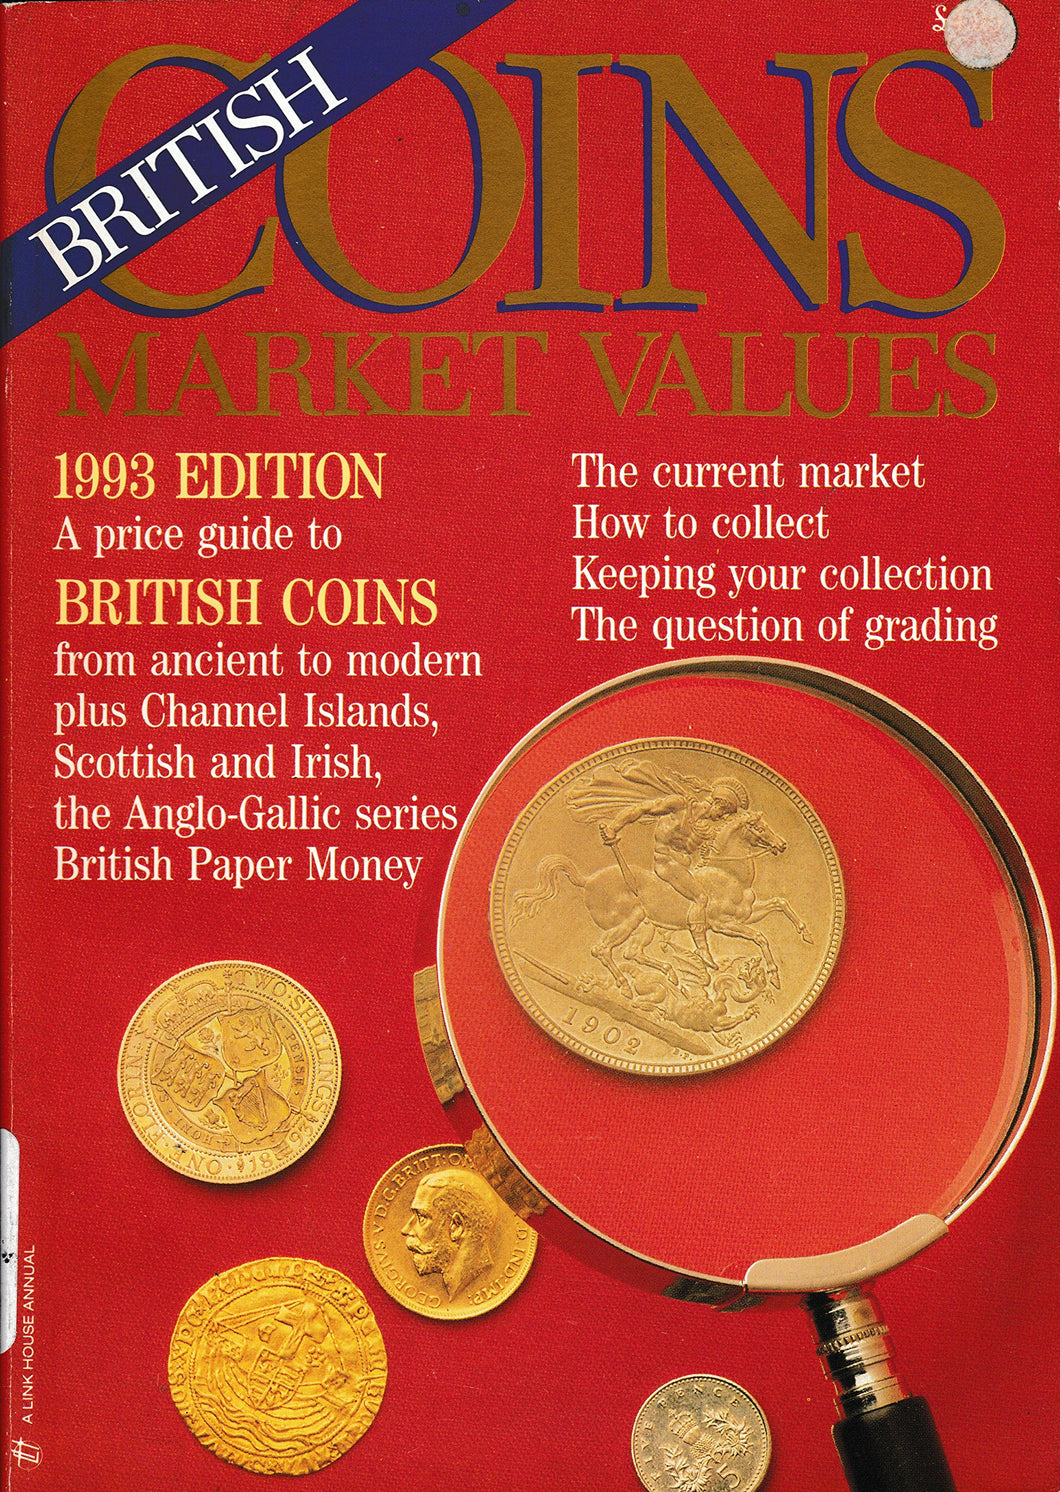 Coins Market Values 1993